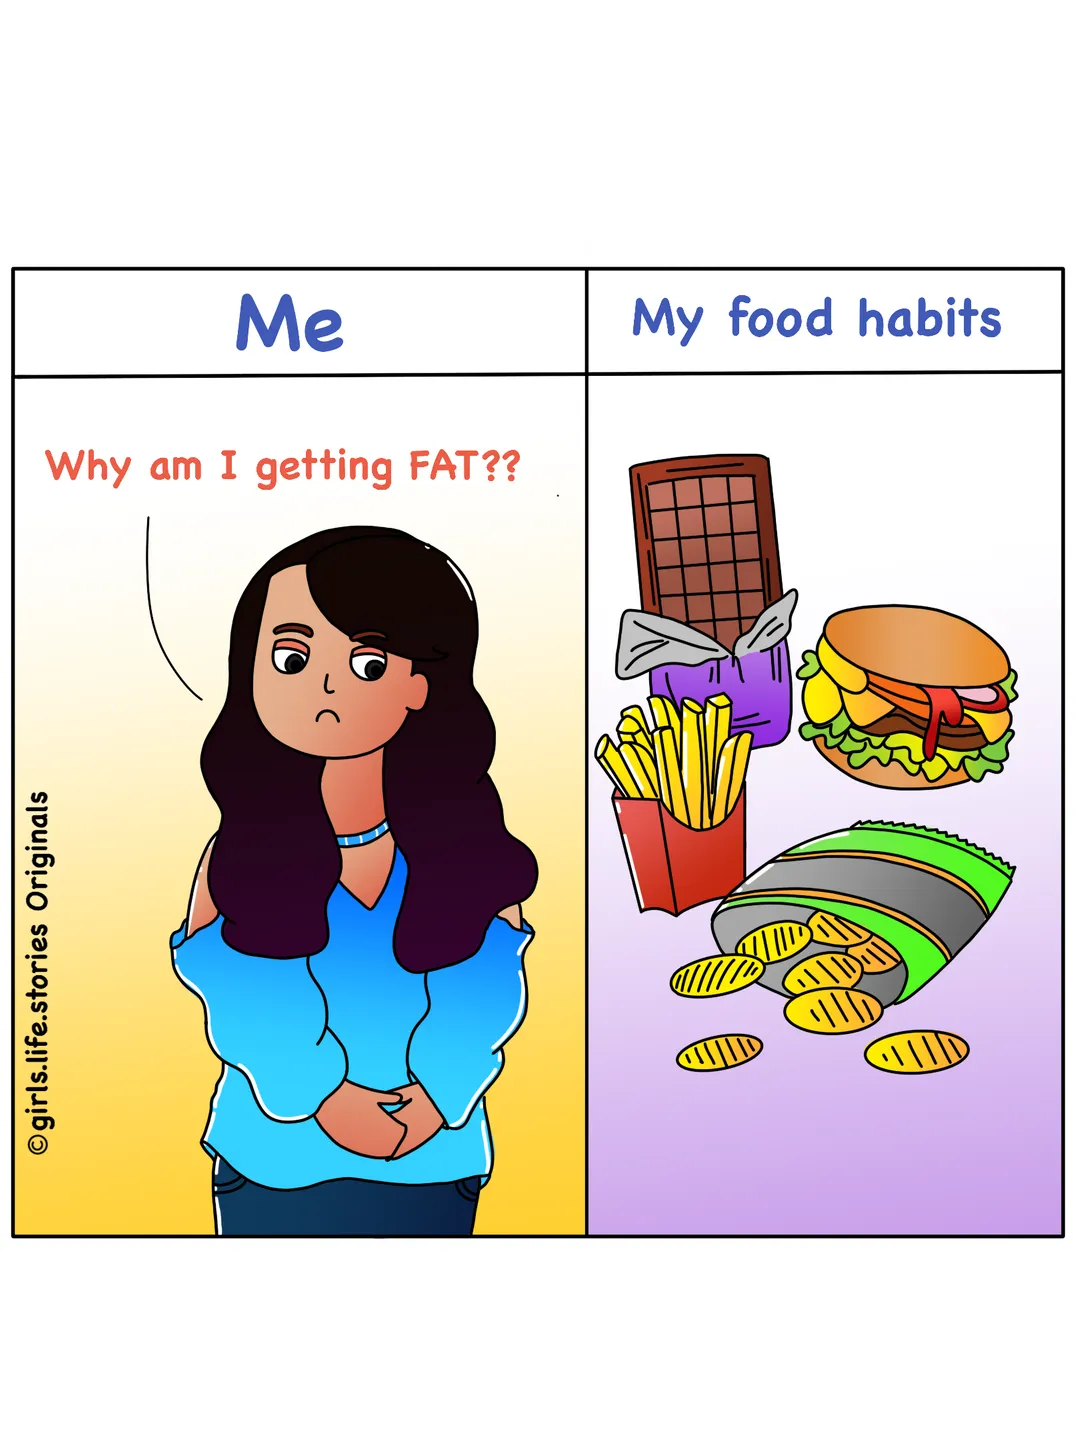 My food habits !!